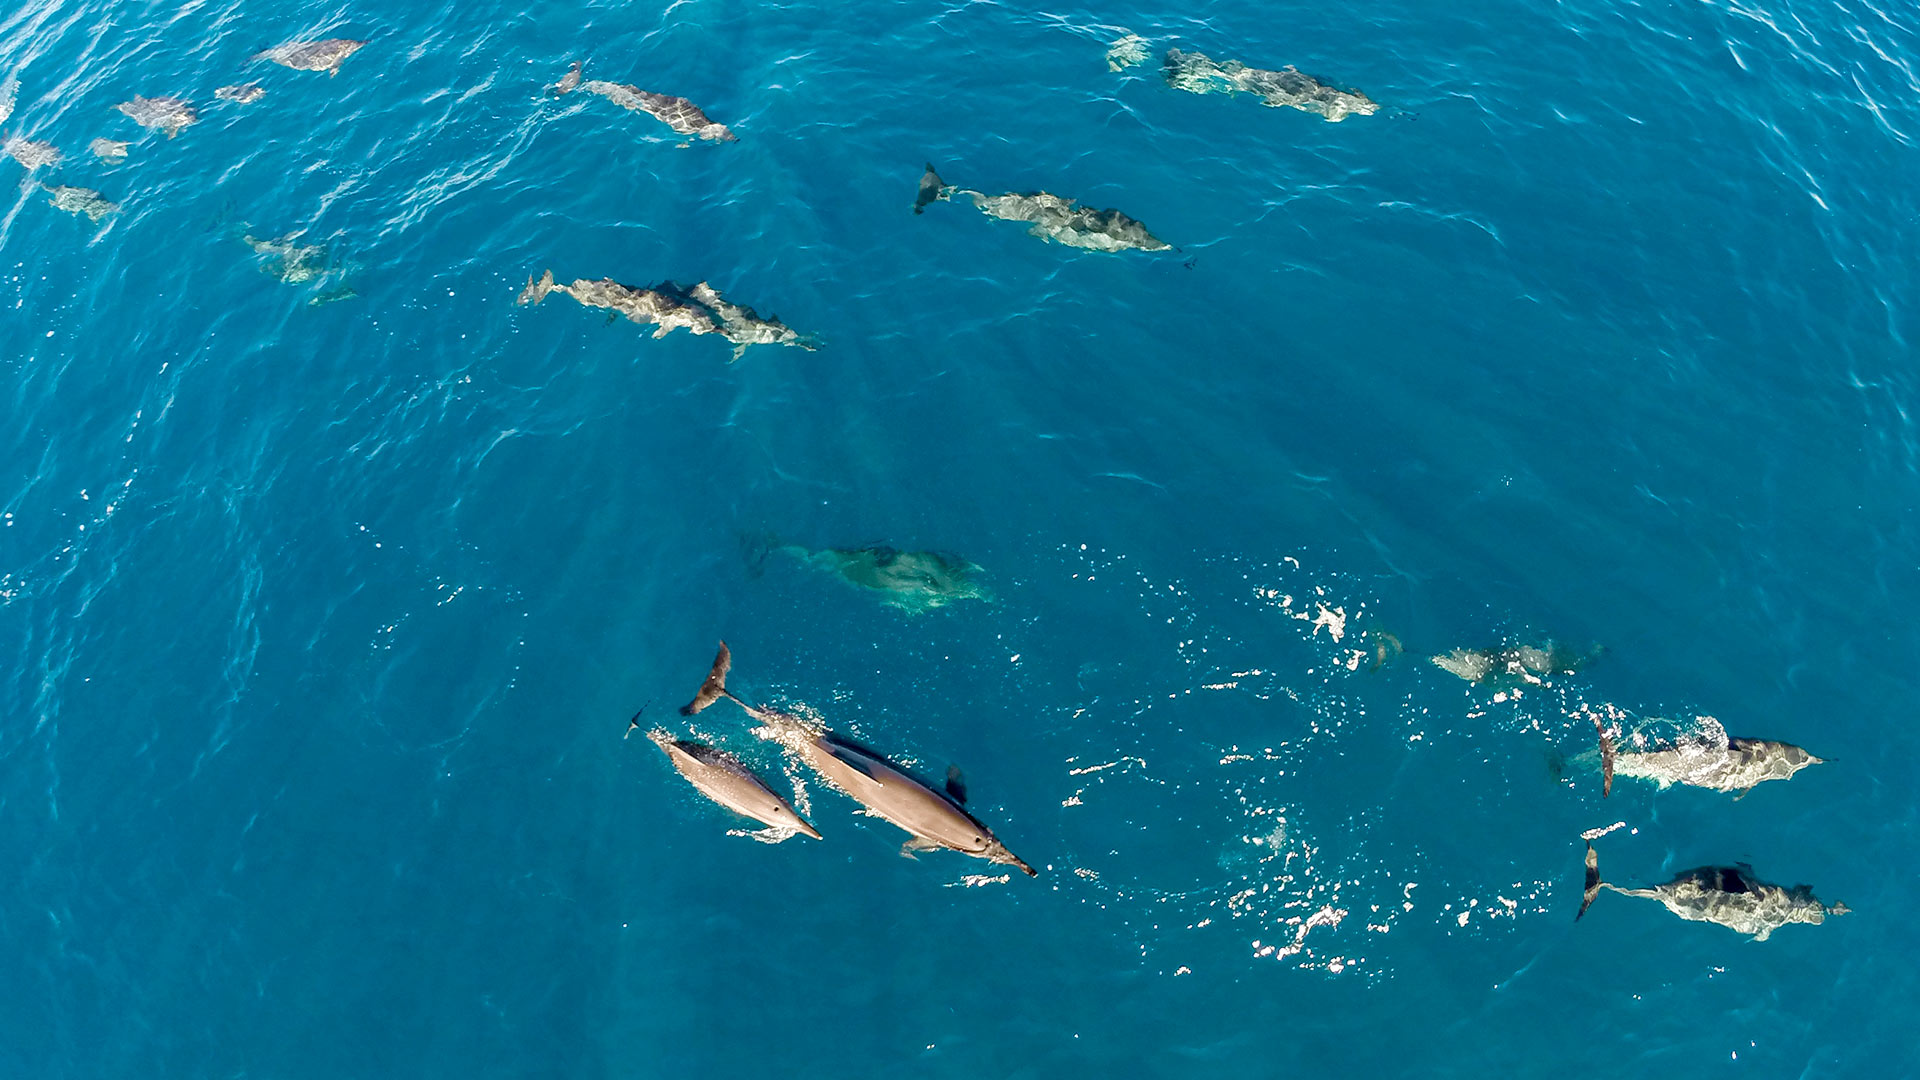 Dolphins are regular visitors at Kaupulehu